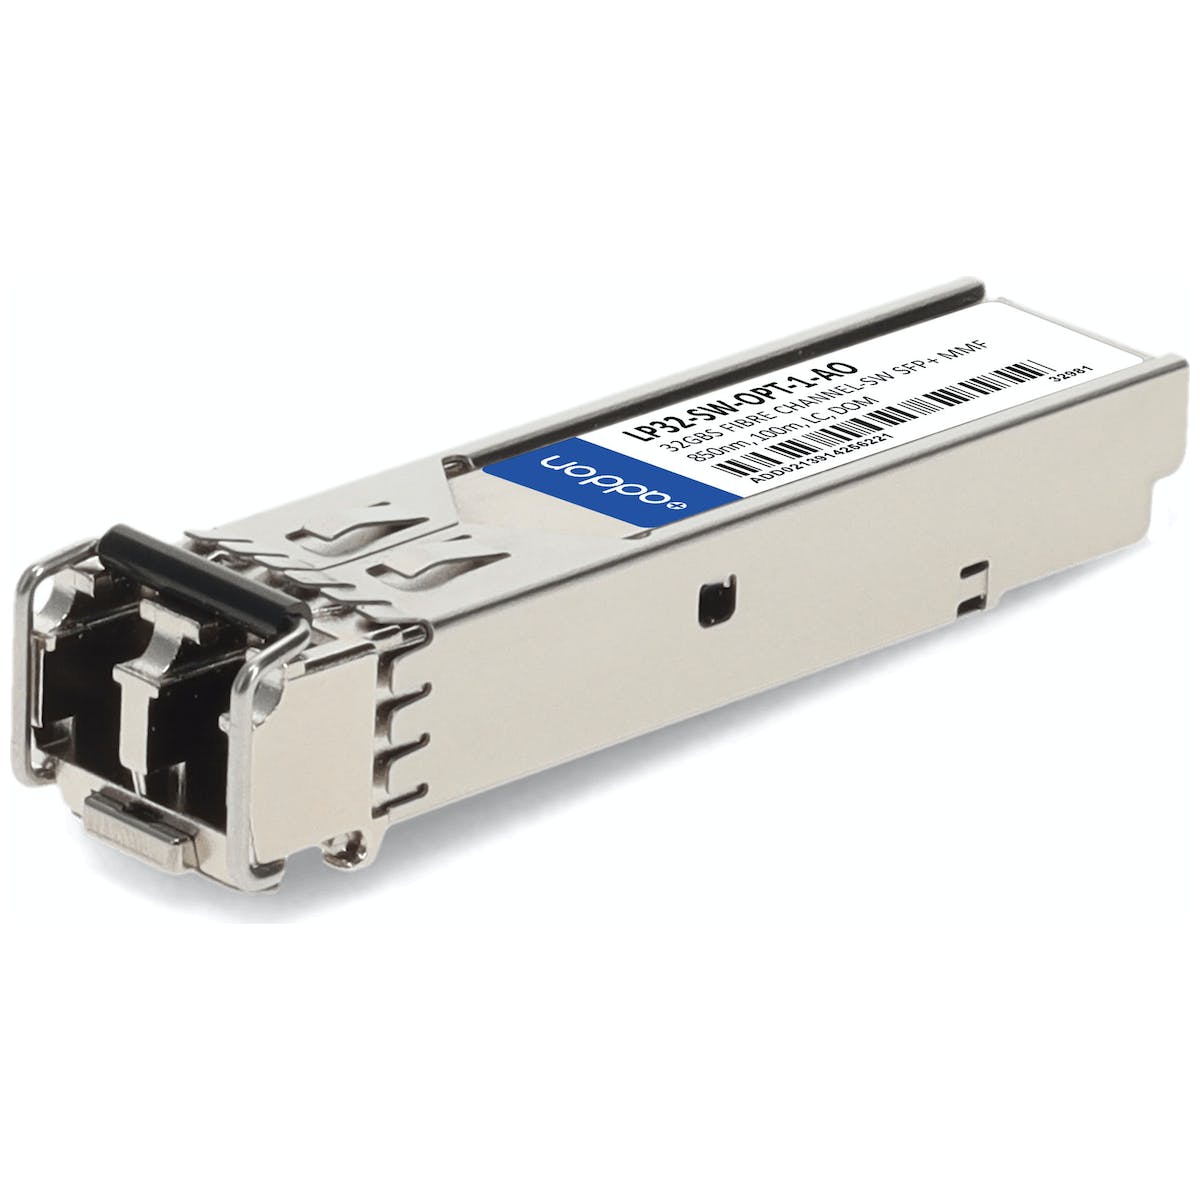 Emulex - SFP+ Transceiver Module - 32 Gb Fiber Channel (LW) - LC (pack of 2) (LP32-LW-OPT-2)